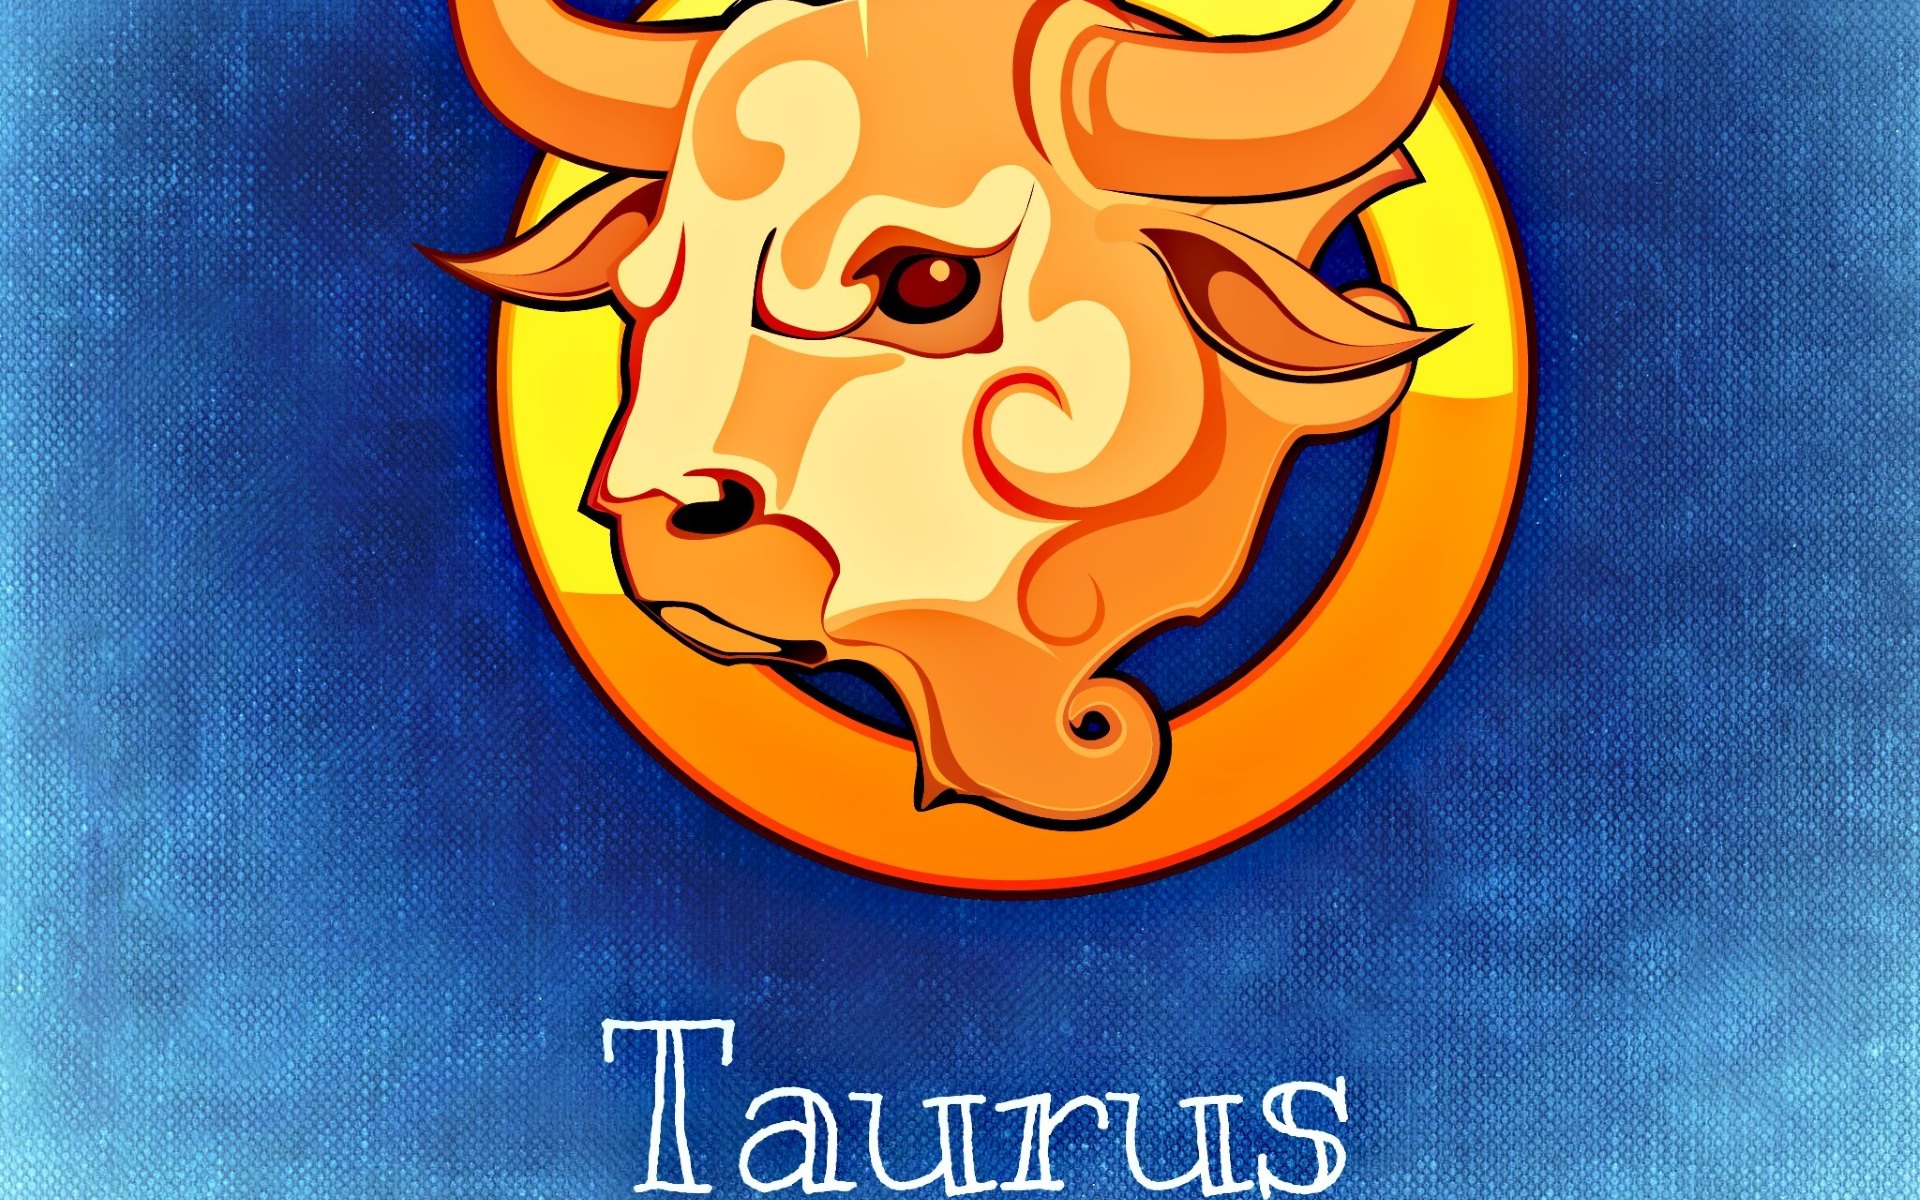 Horoscope - Taurus by Alexas_Fotos